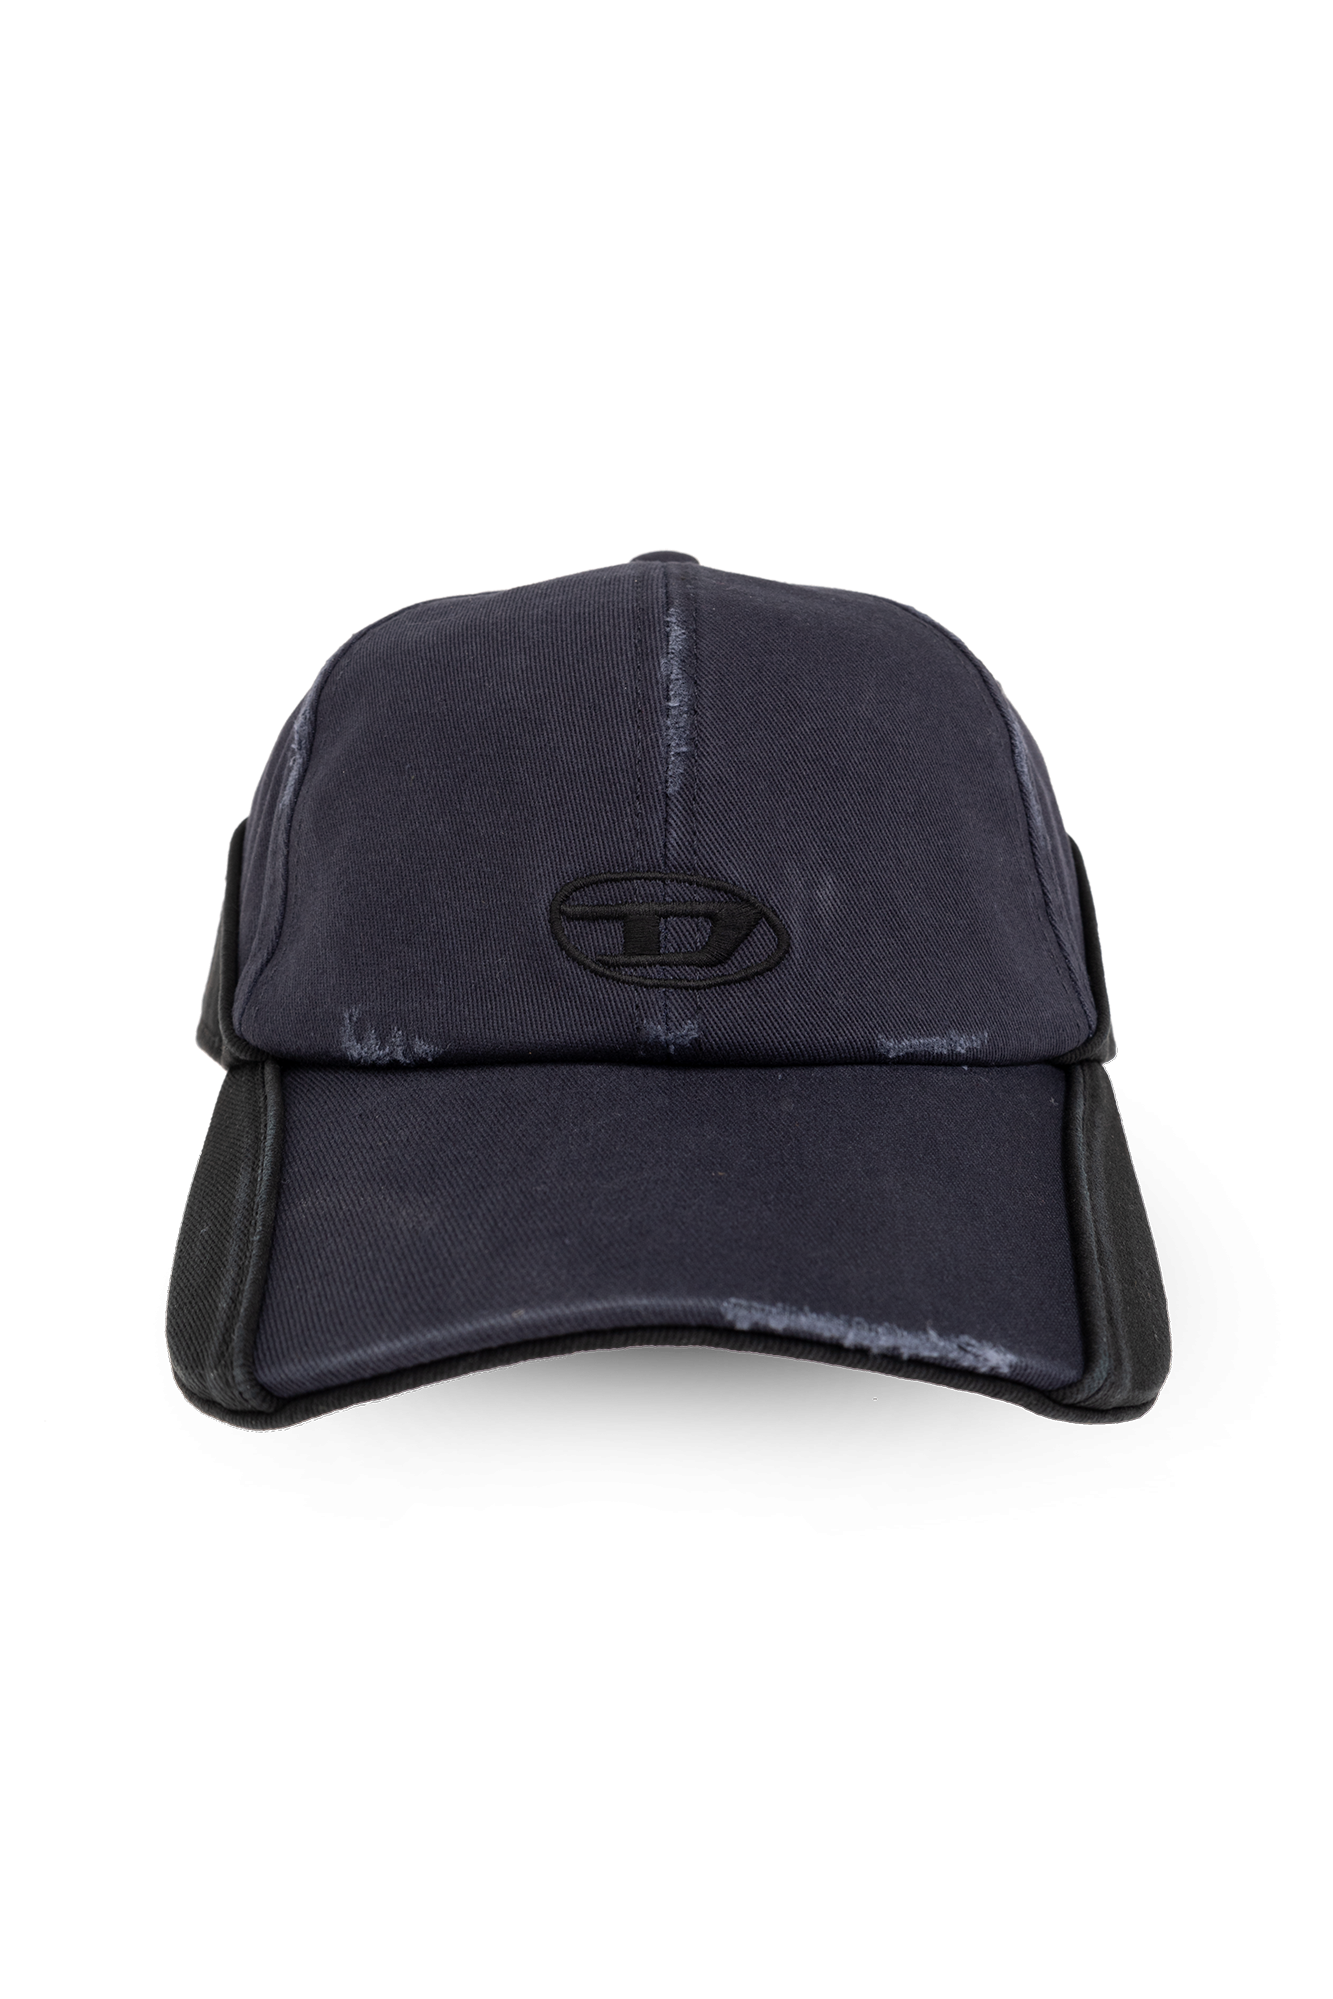 Diesel 'C-DALE' baseball cap, Men's Accessories